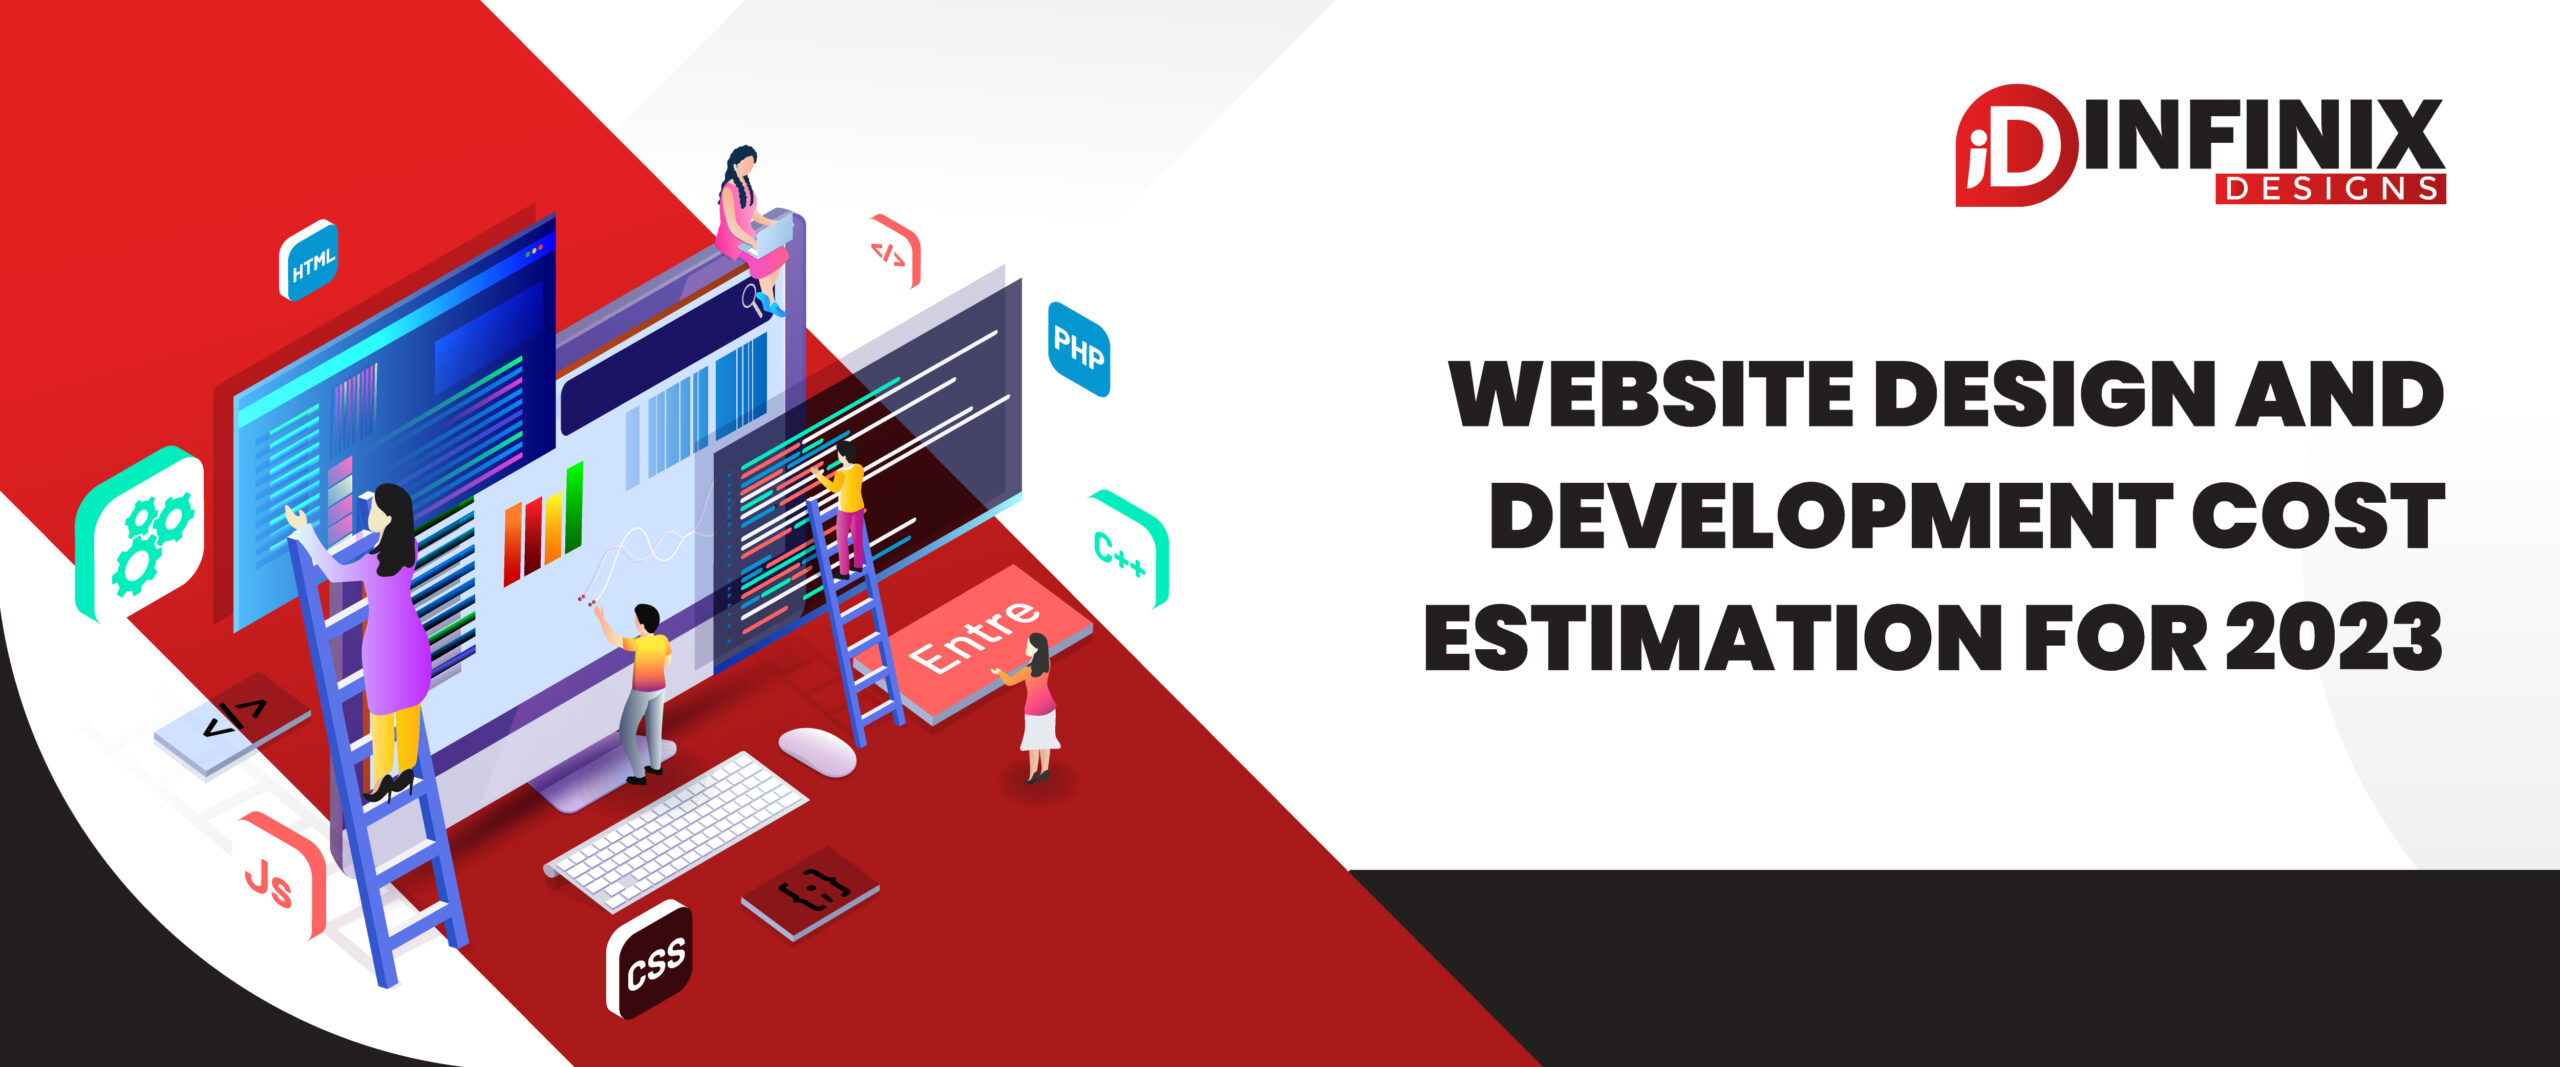 Website Design and Development Cost